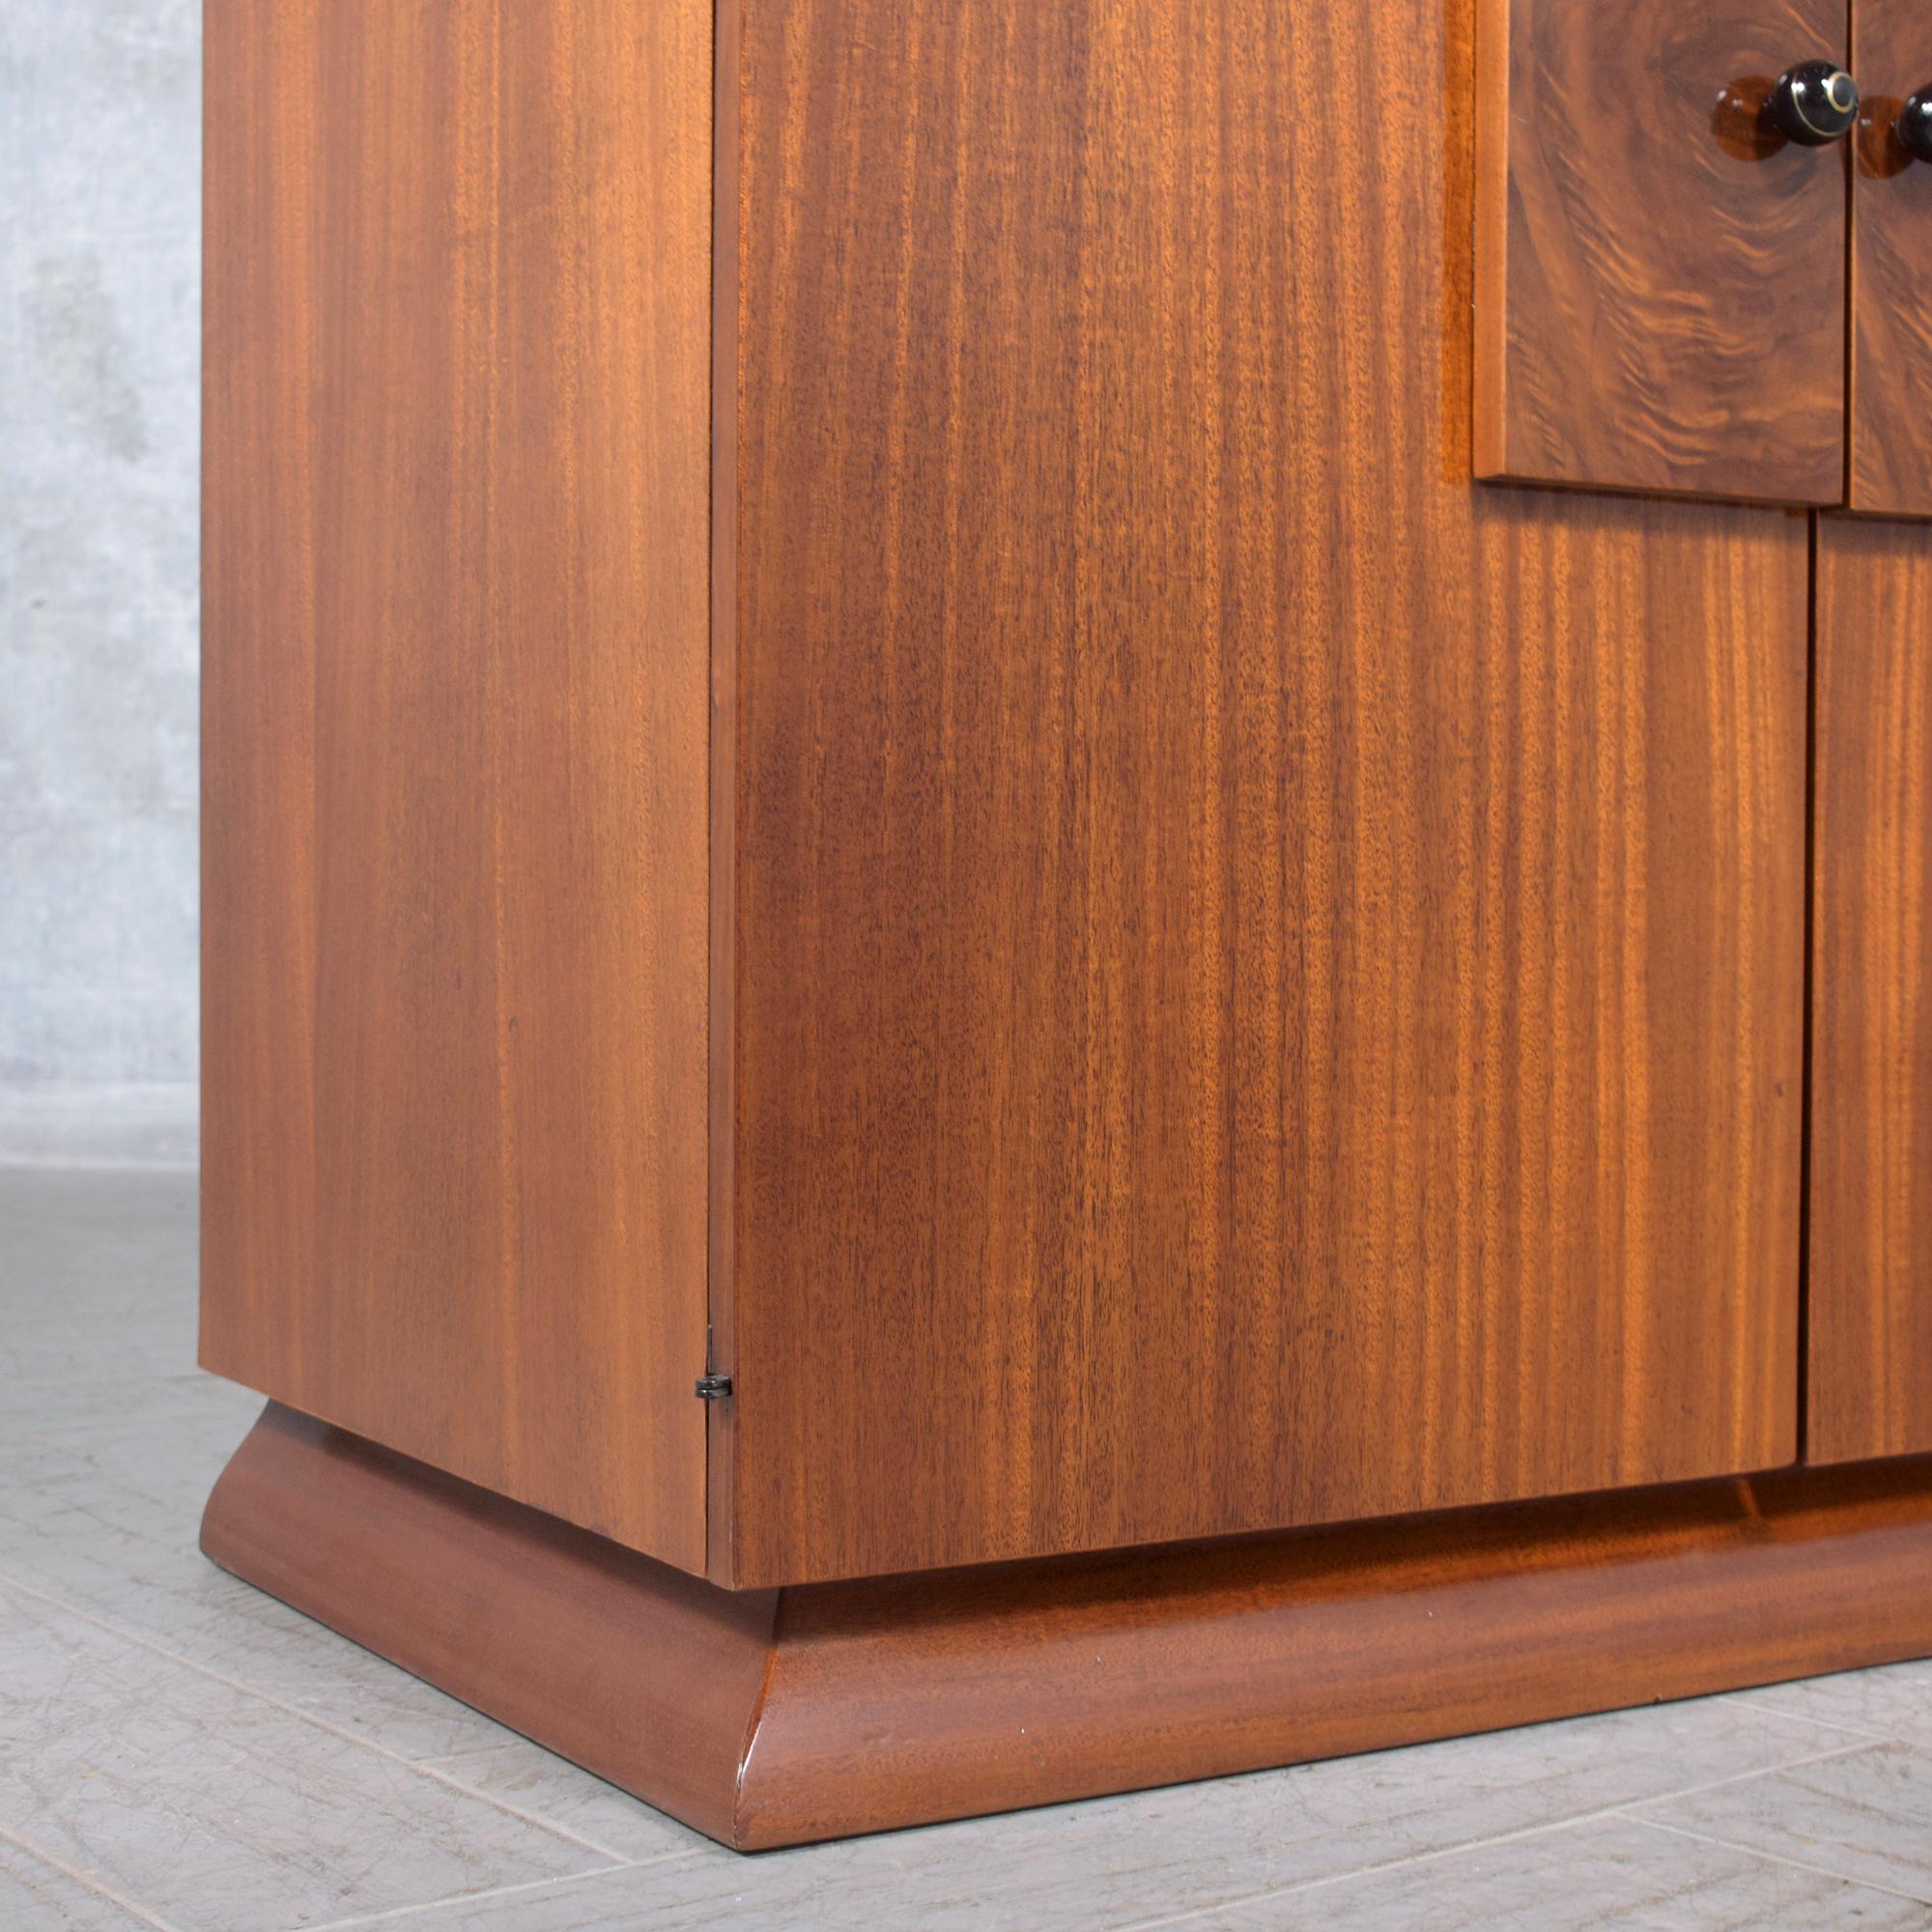 Restored Vintage Mid-Century Wood Cabinet with Burl Door Details For Sale 2